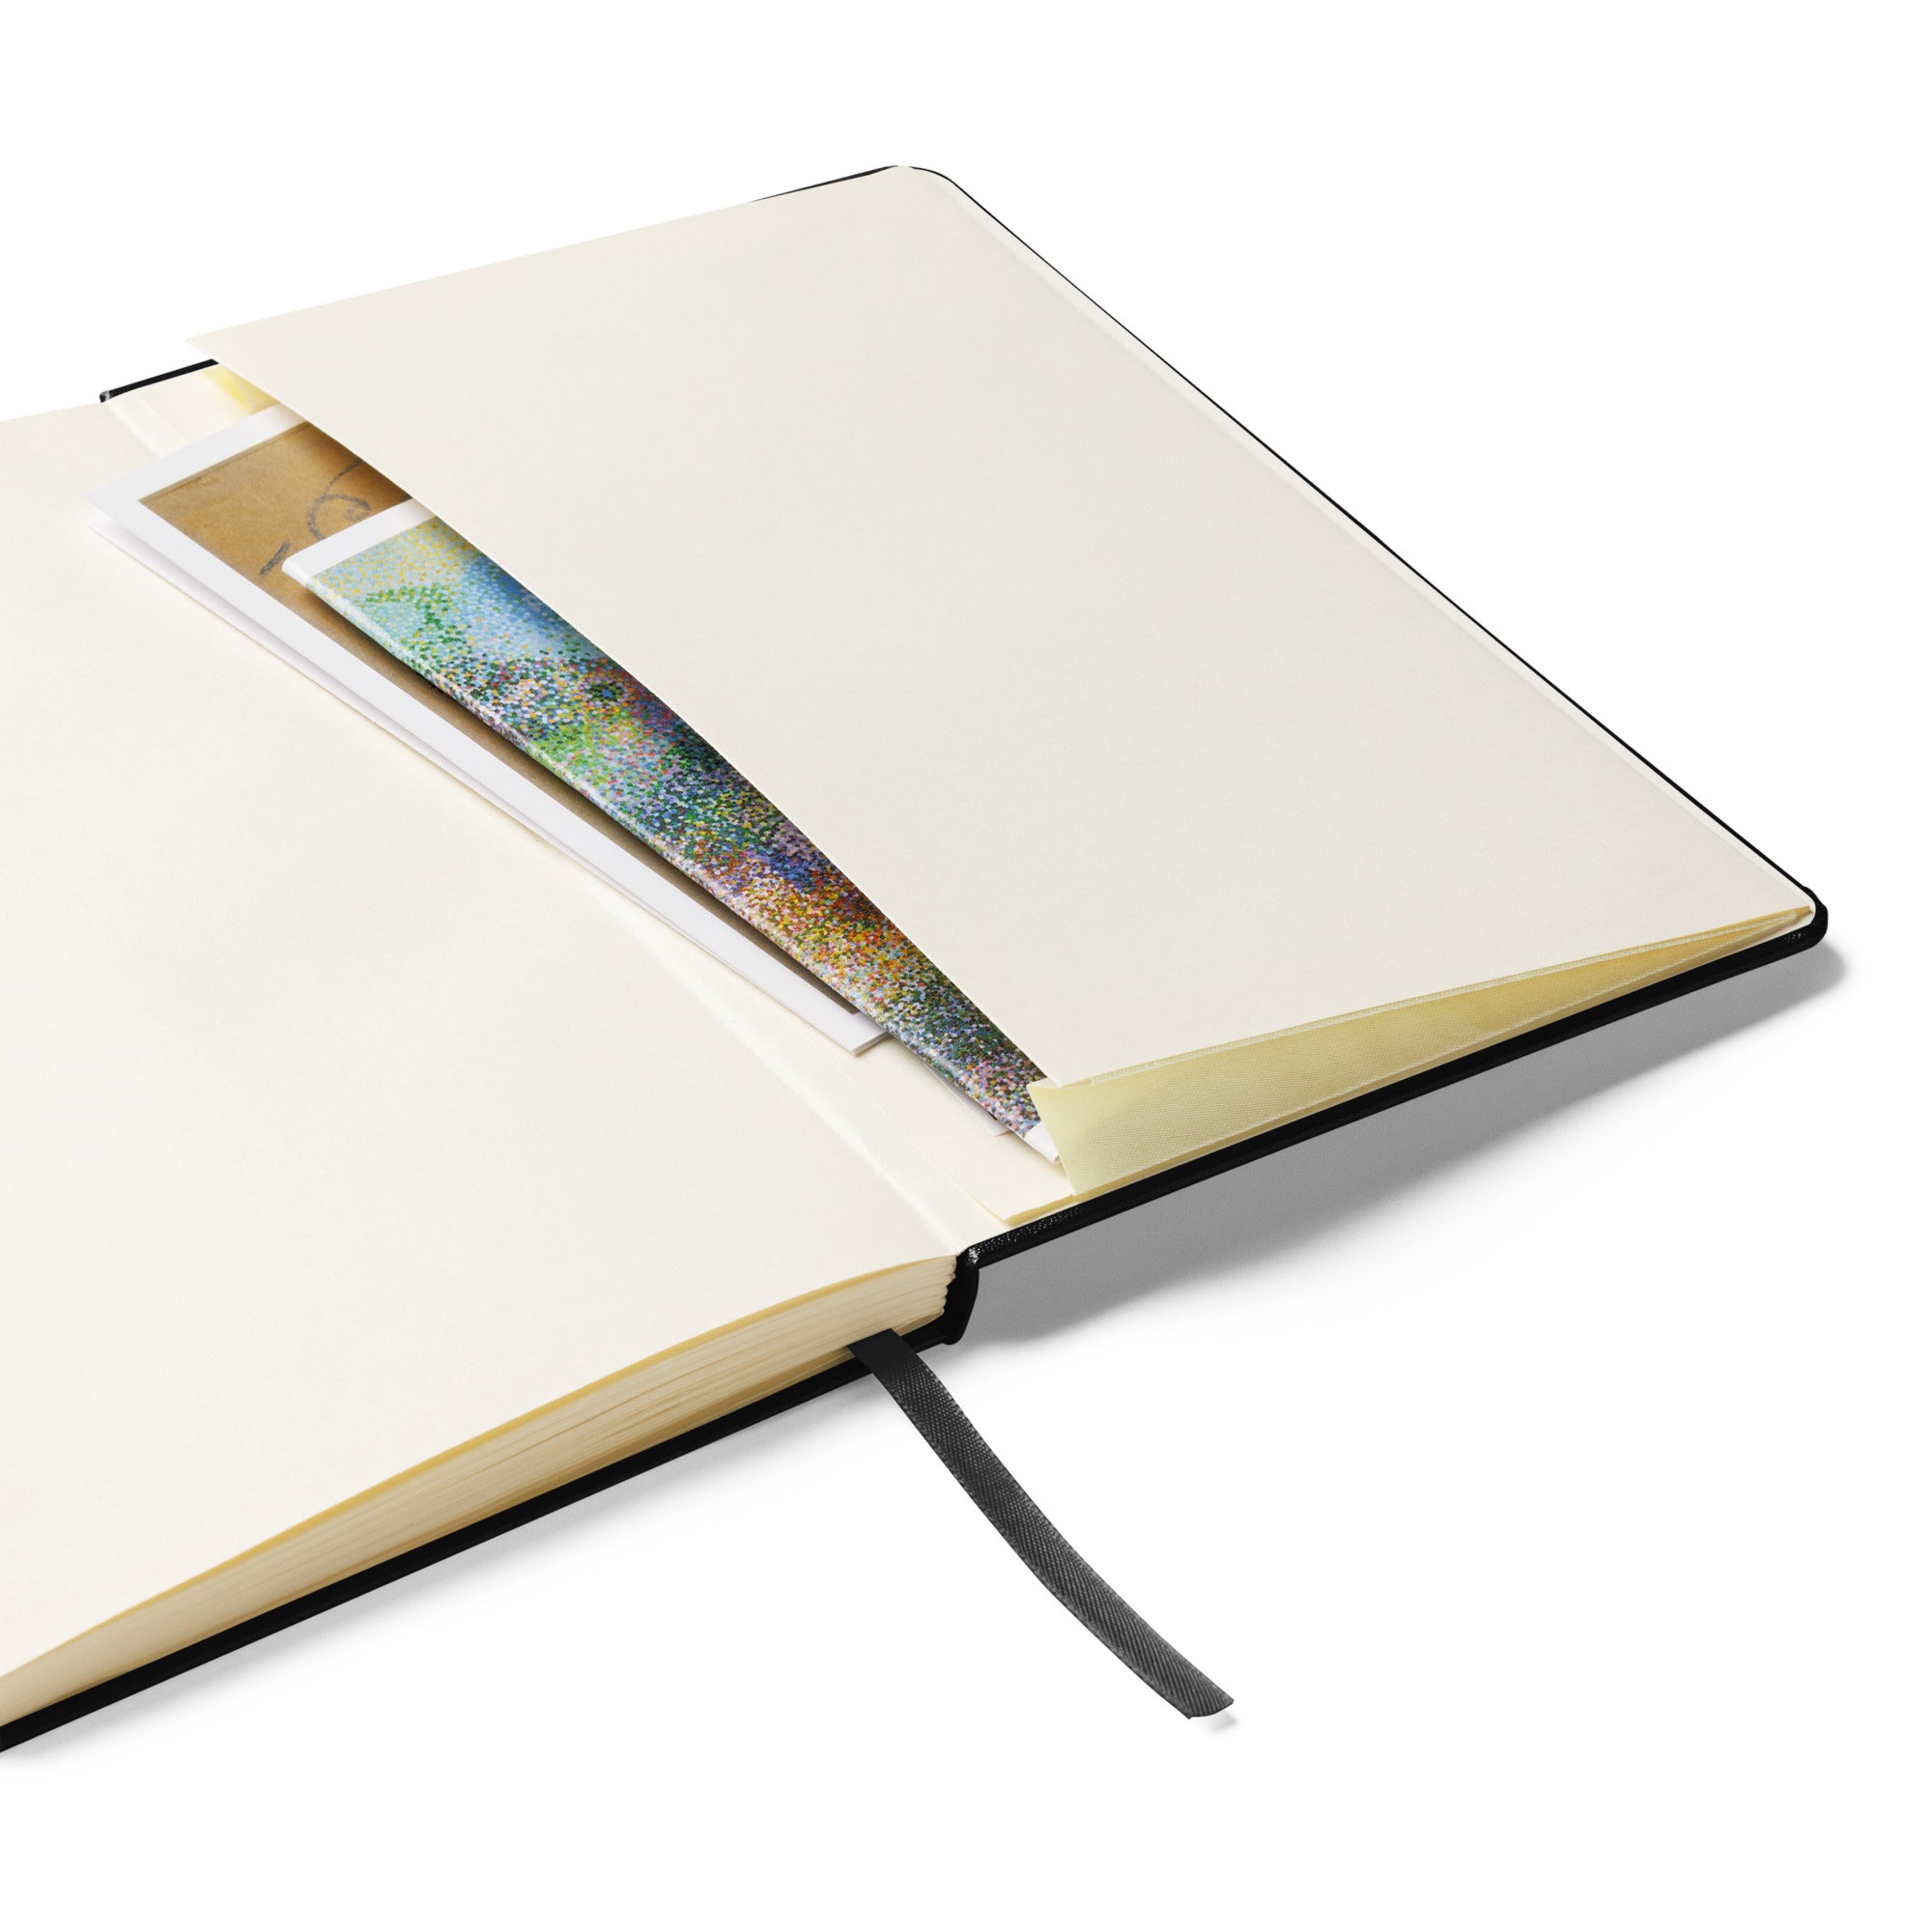 hardcover-bound-notebook-black-product-details-3-64cc04ebdf14f.jpg